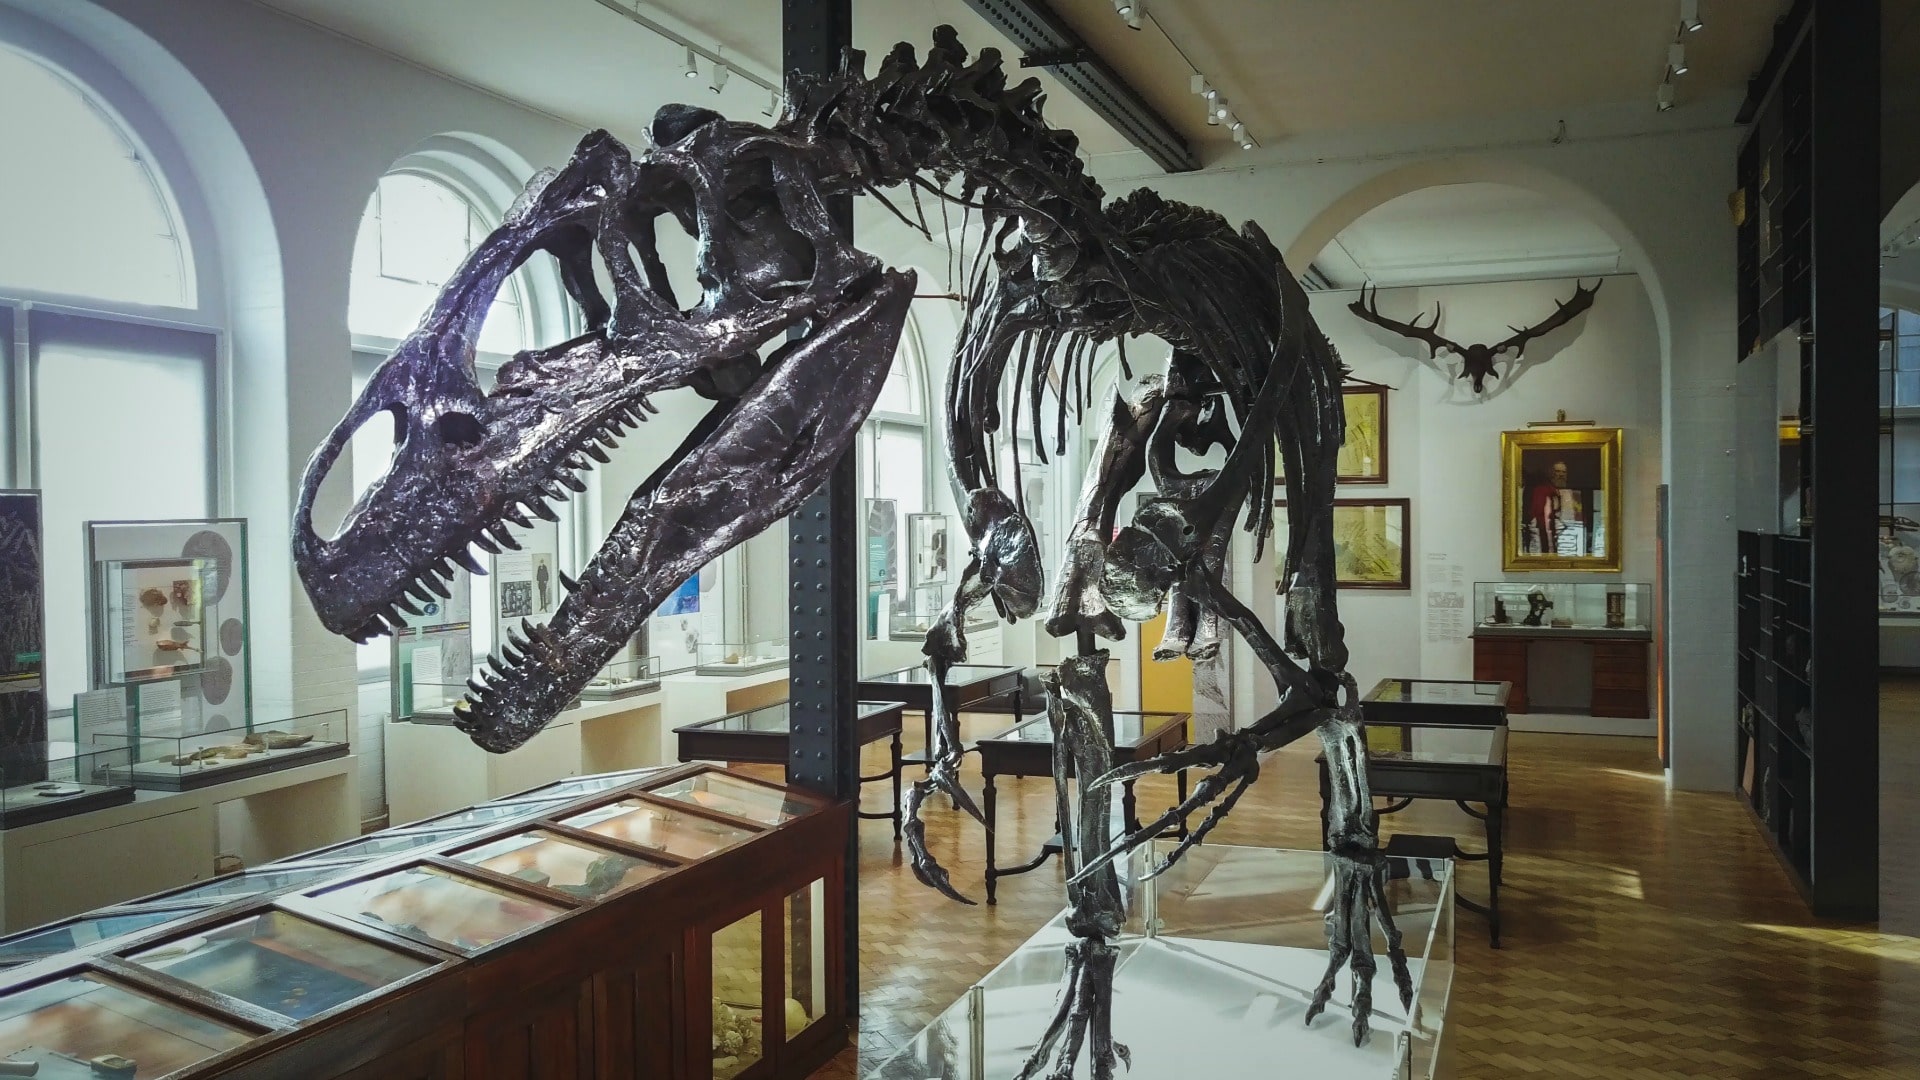 'Roary' the Allosaurus skeleton on display in the Lapworth Museum.